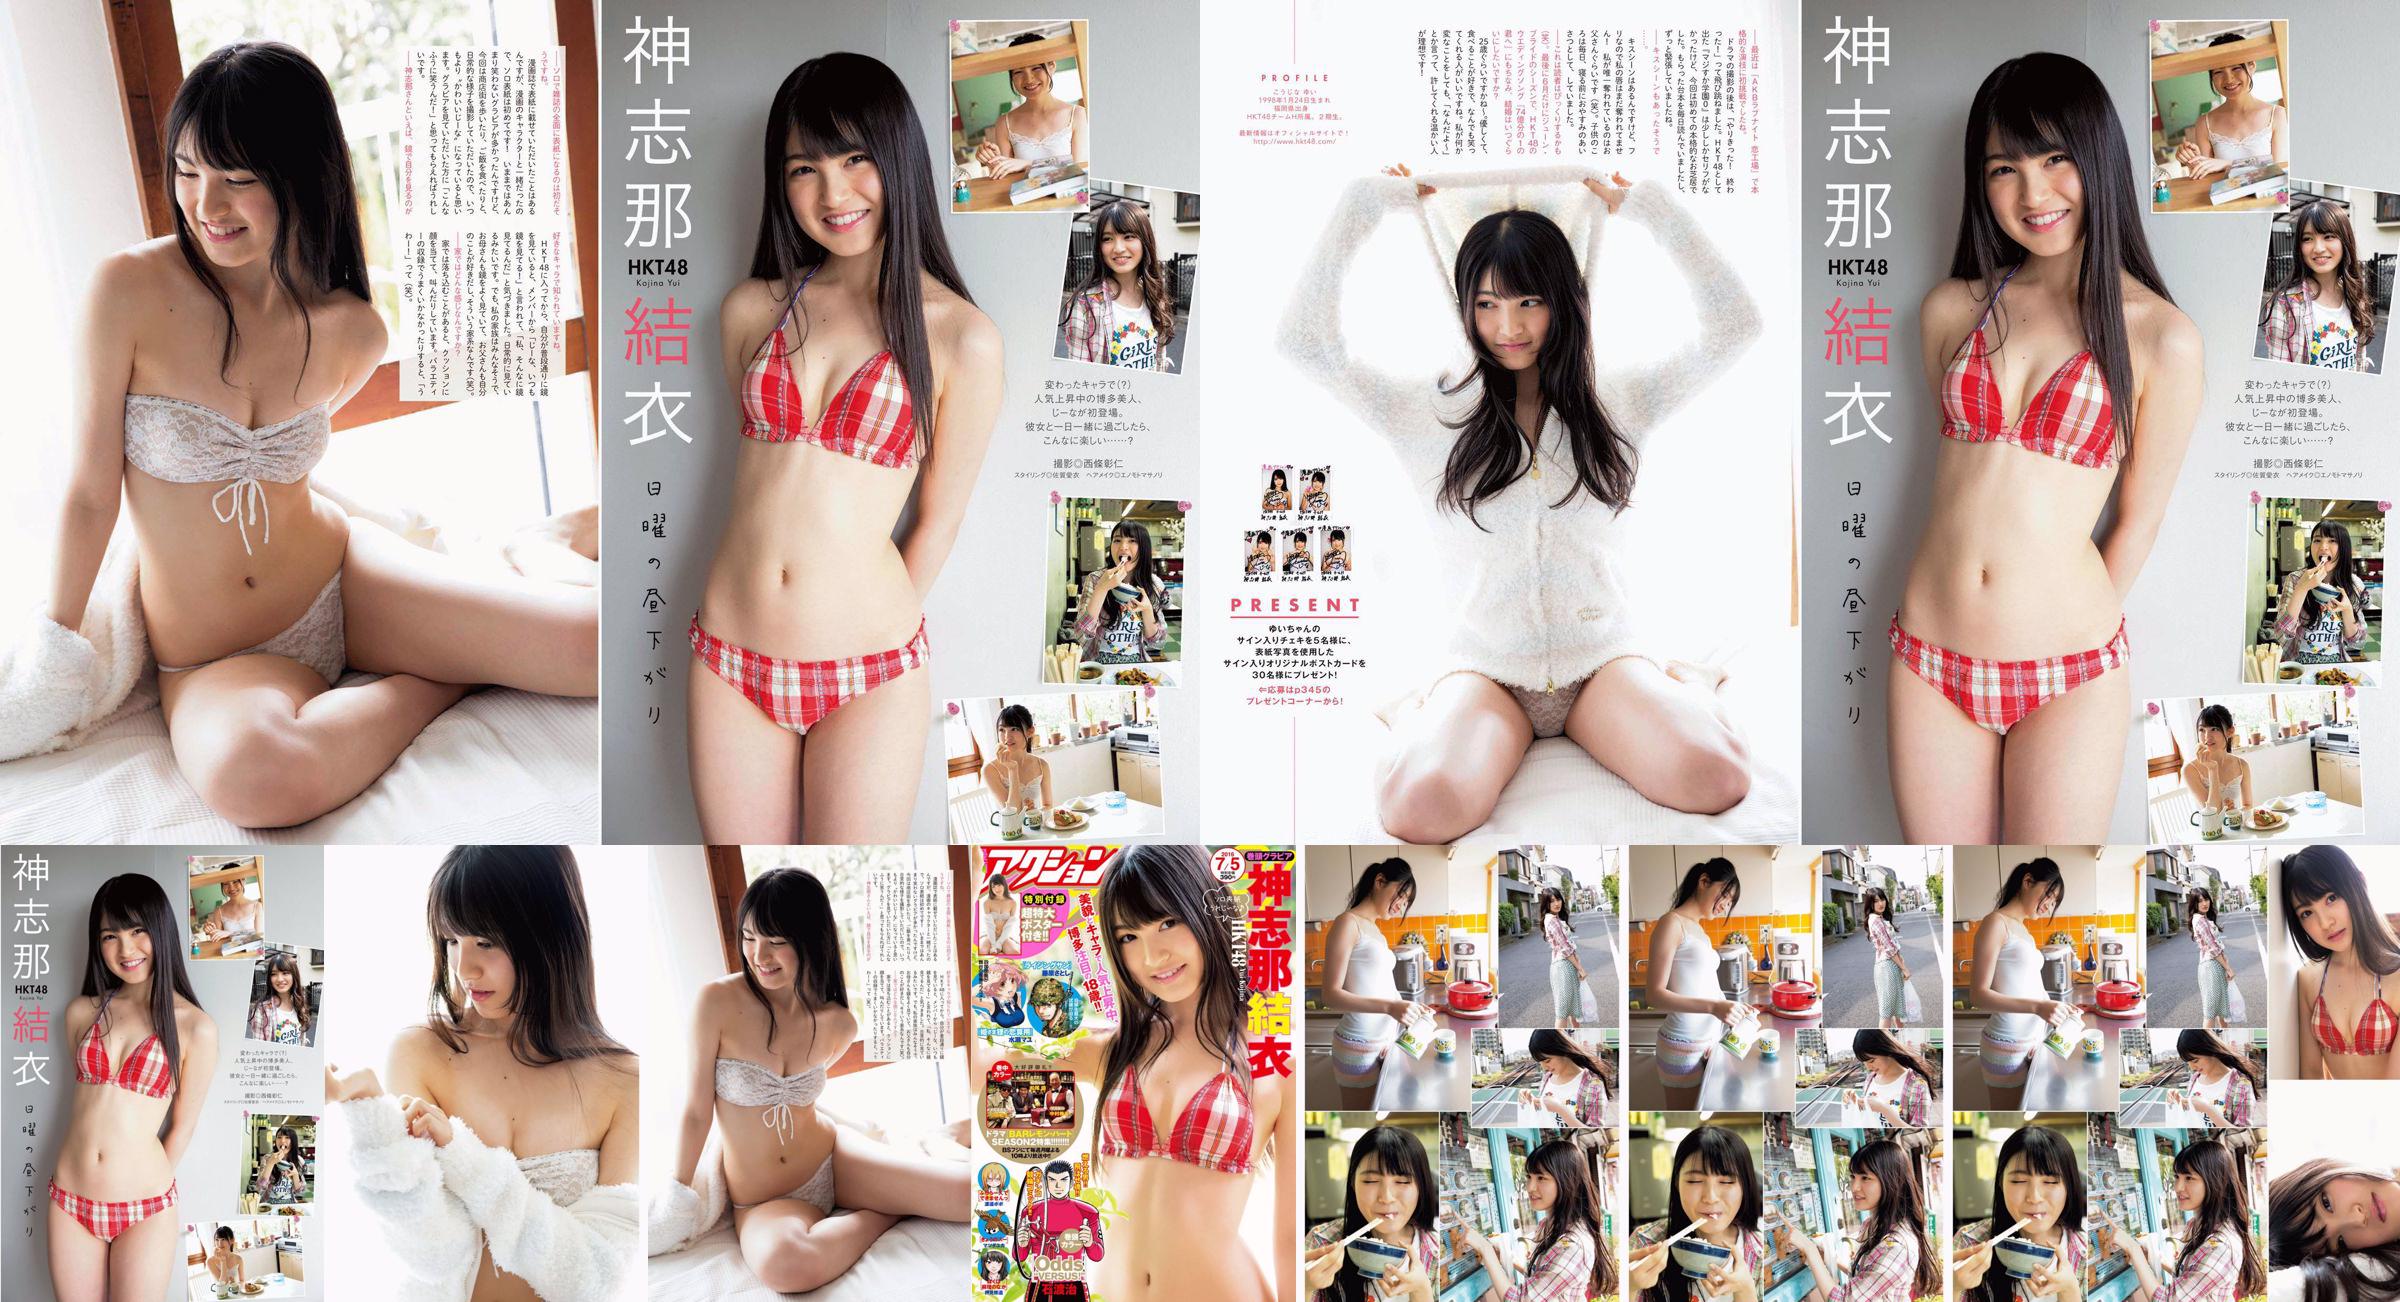 [Manga Action] Shinshina Yui 2016 N ° 13 Photo Magazine No.85a7a9 Page 2